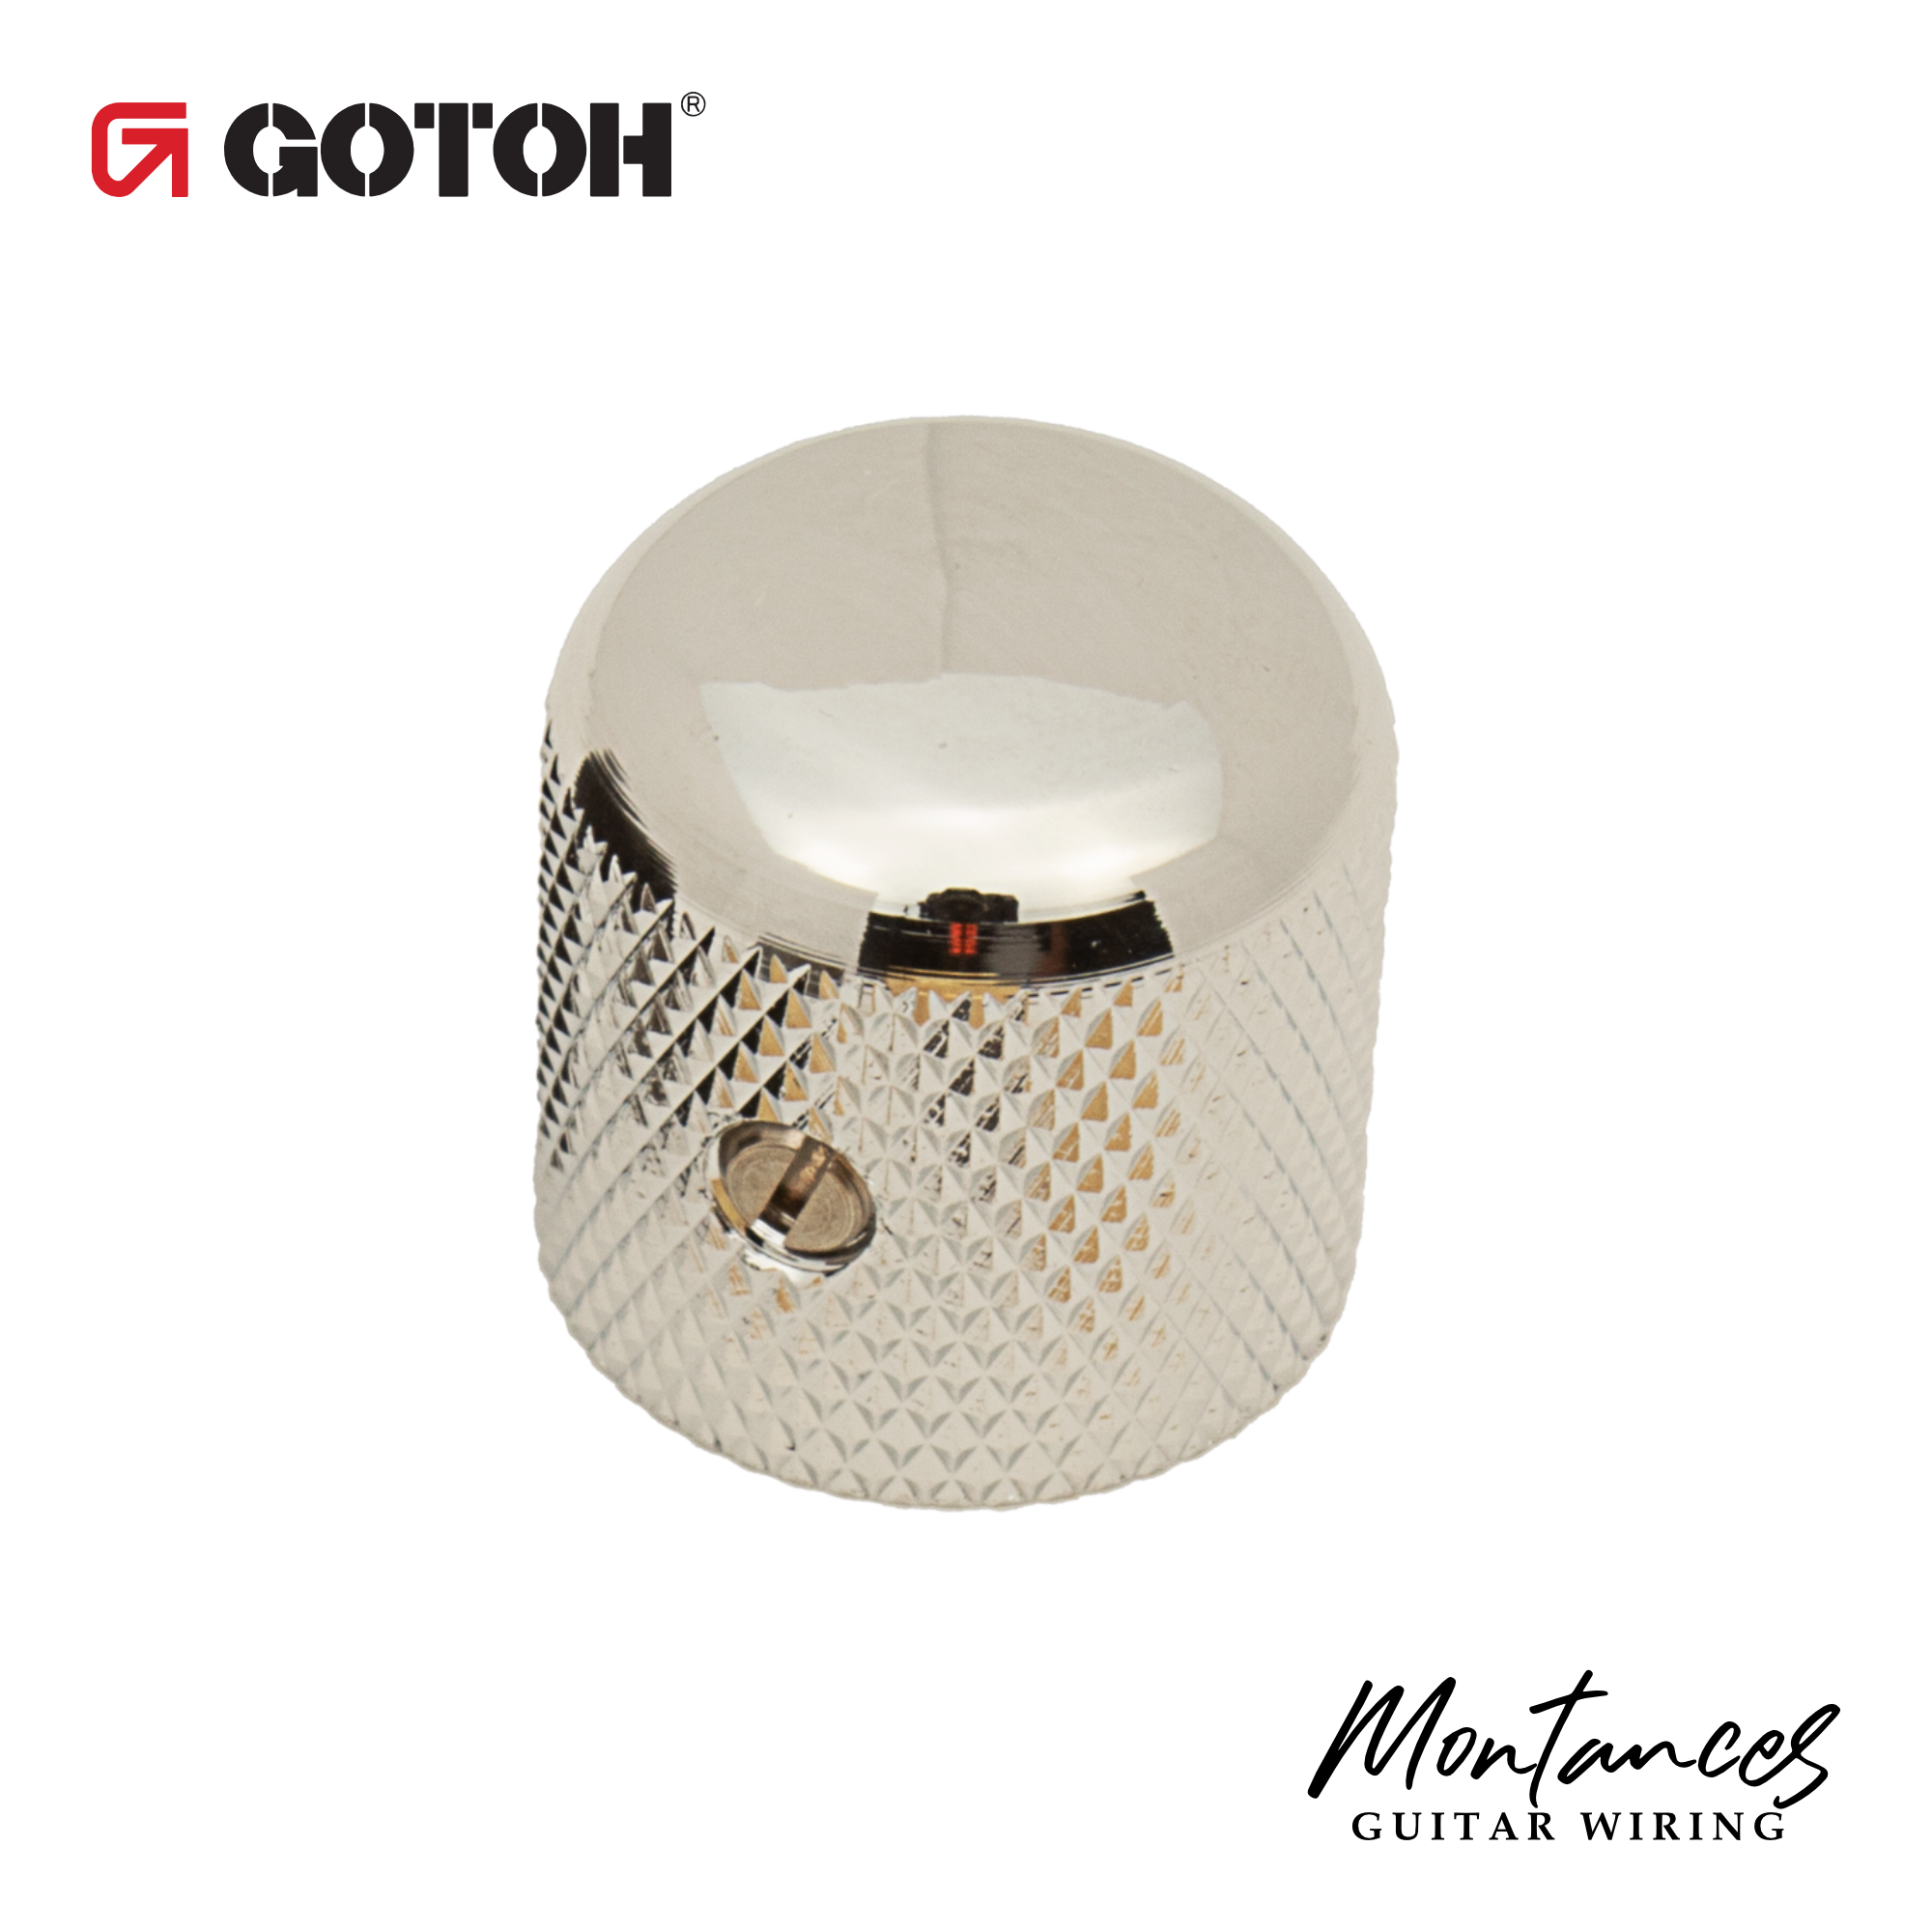 Gotoh® Metal Knobs for 6.35mm (1/4") Solid Shaft Pots